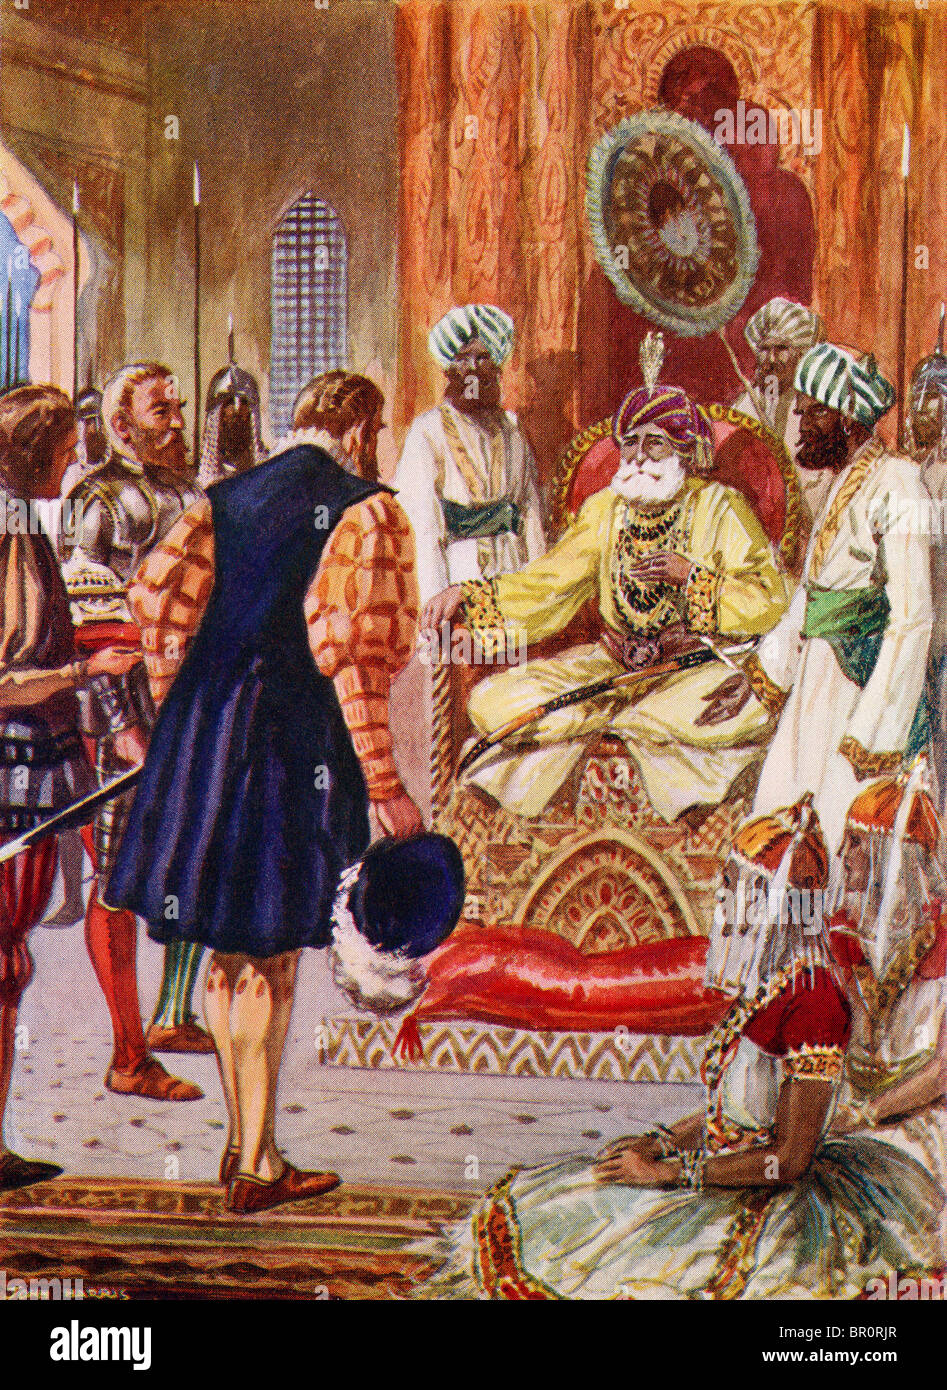 Vasco Da Gama visiter le Rajah de New Delhi, Inde en 1498. Vasco da Gama, premier comte de Vidigueira, c.1460 ou 1469 à 1524. Banque D'Images